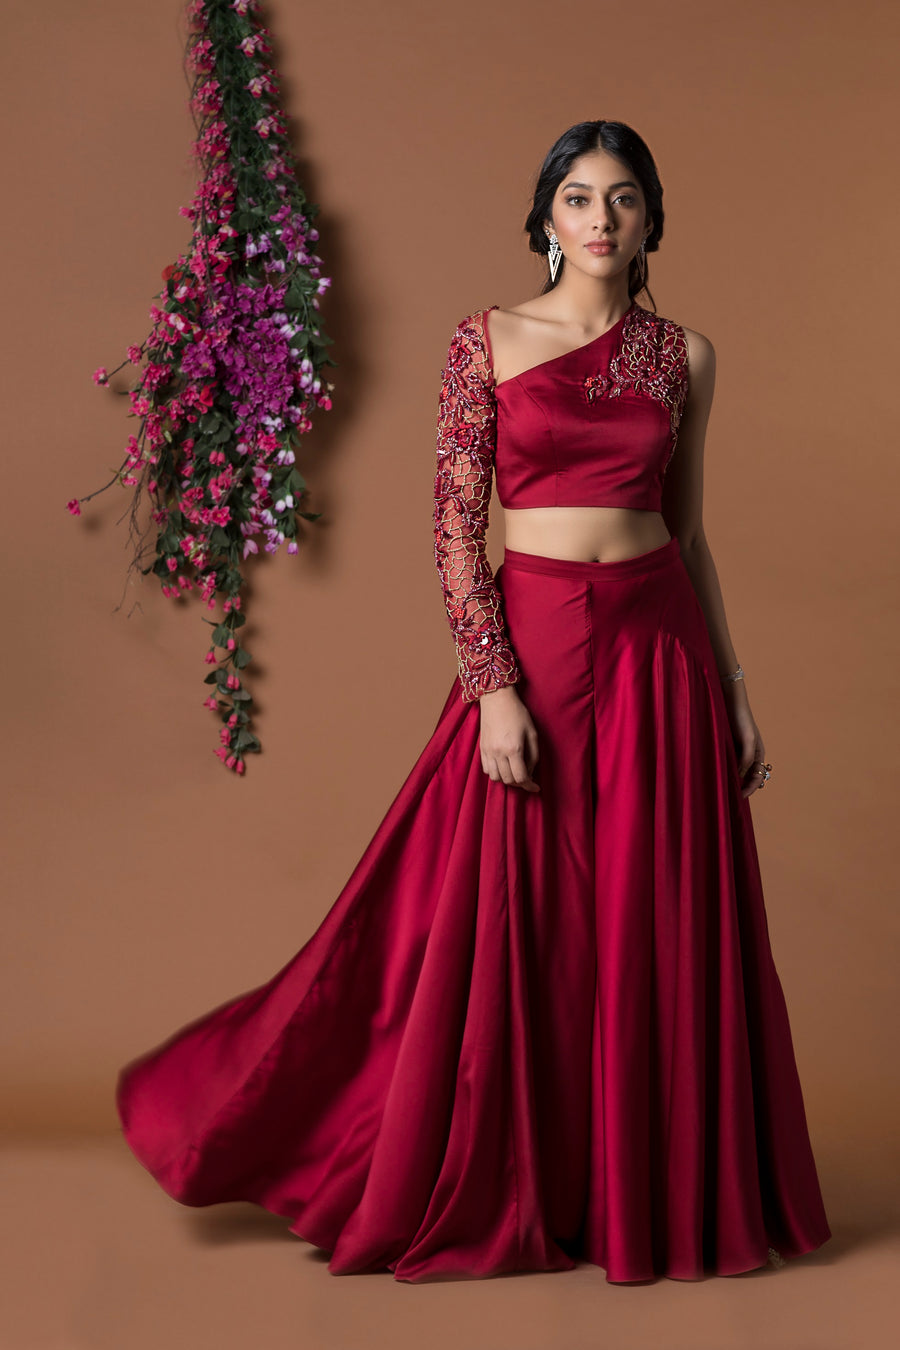 Mehak Murpana | Palazzo Pants & Crop Top | Indian Wedding Wear for sangeet & mehndi.